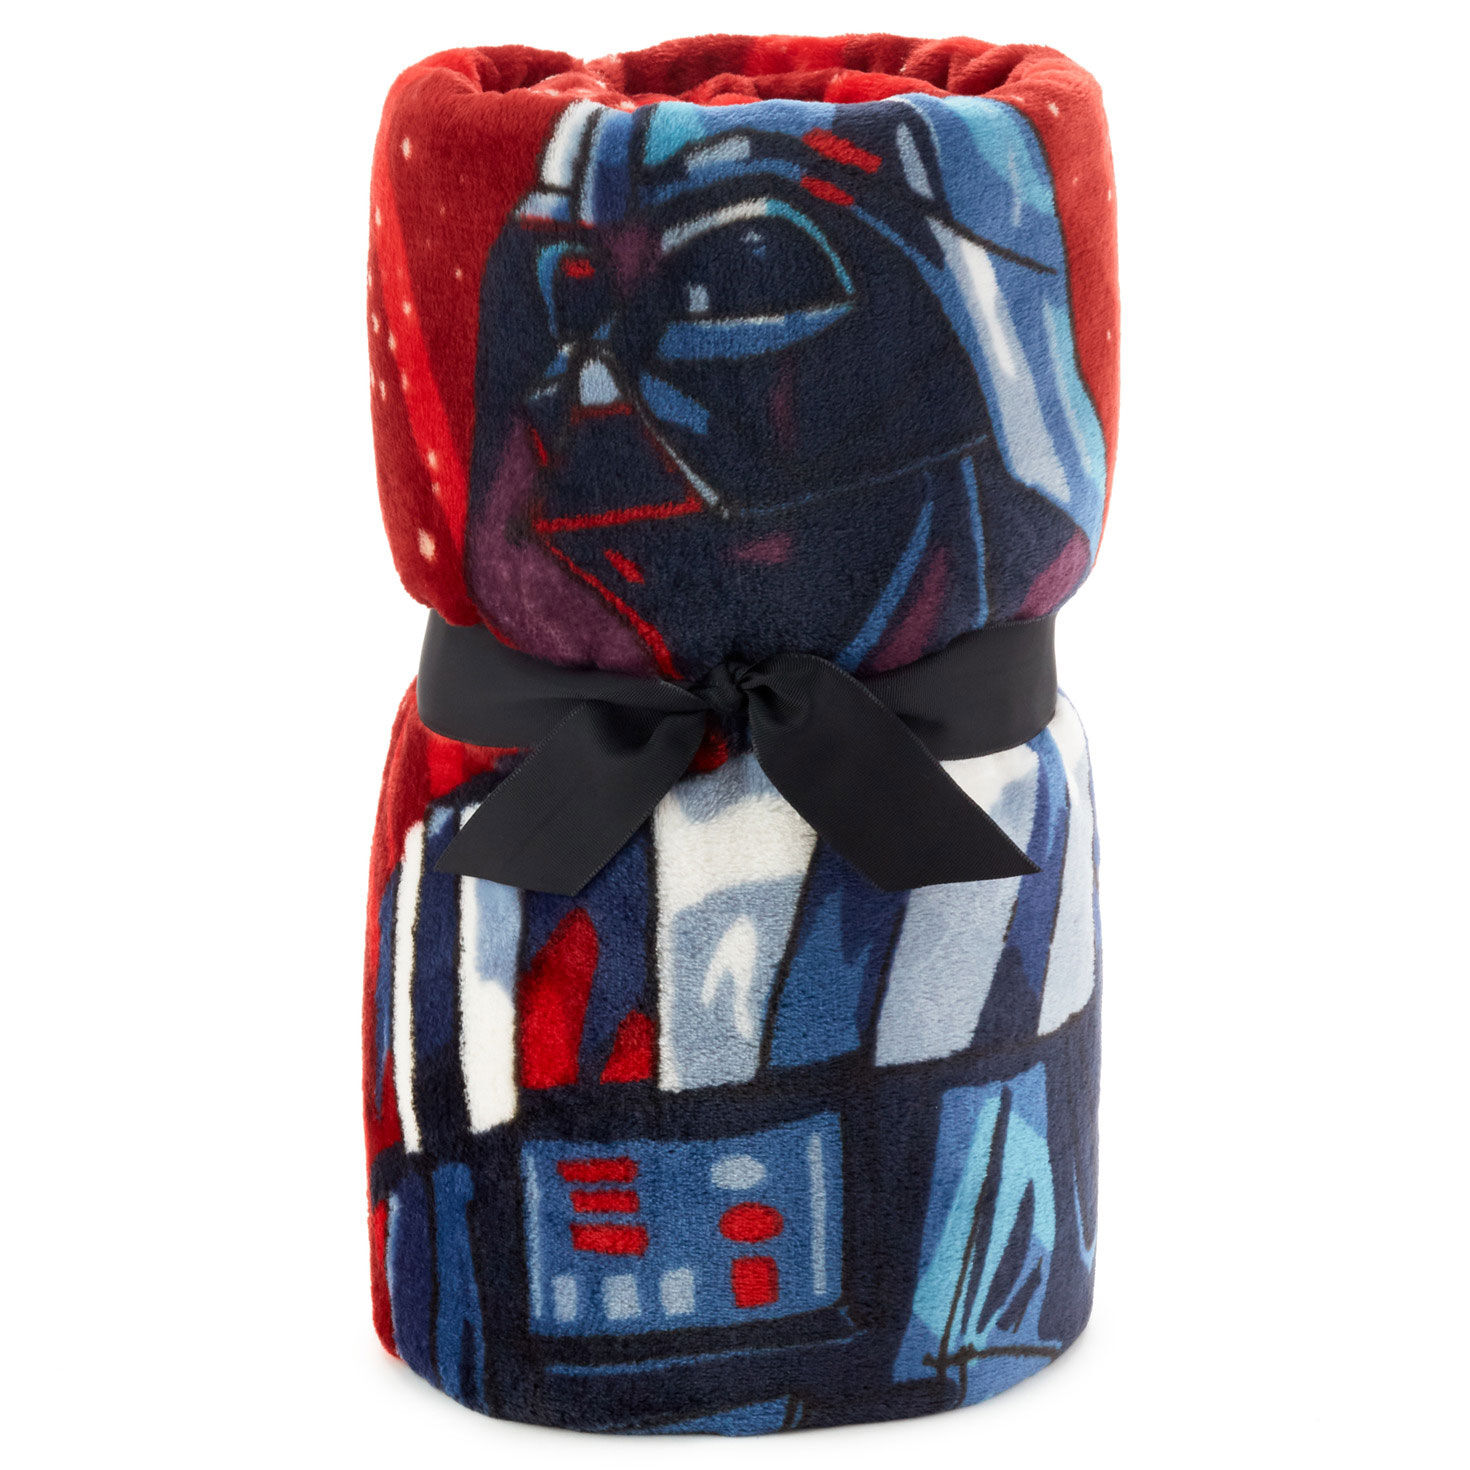 Star Wars™ Darth Vader™ Gift Set - Gift Sets - Hallmark